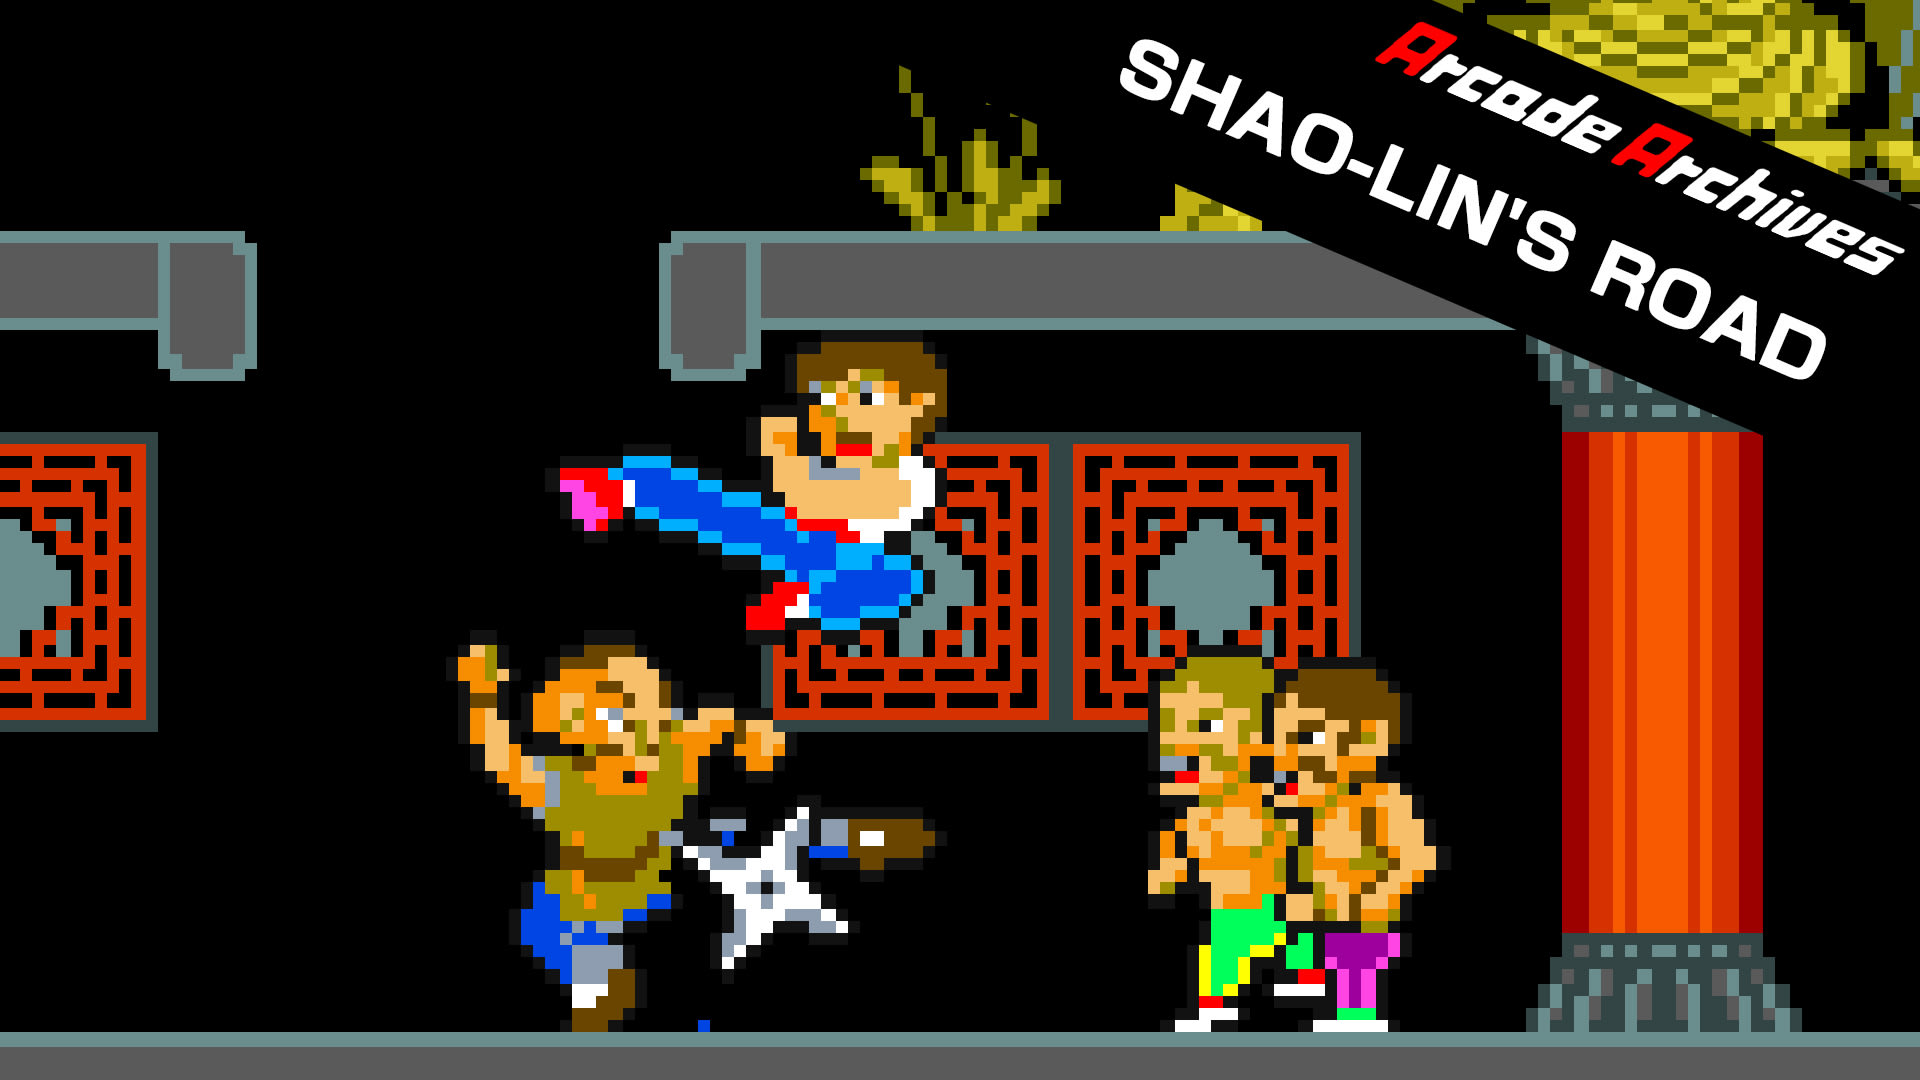 Arcade Archives SHAO-LIN'S ROAD 1